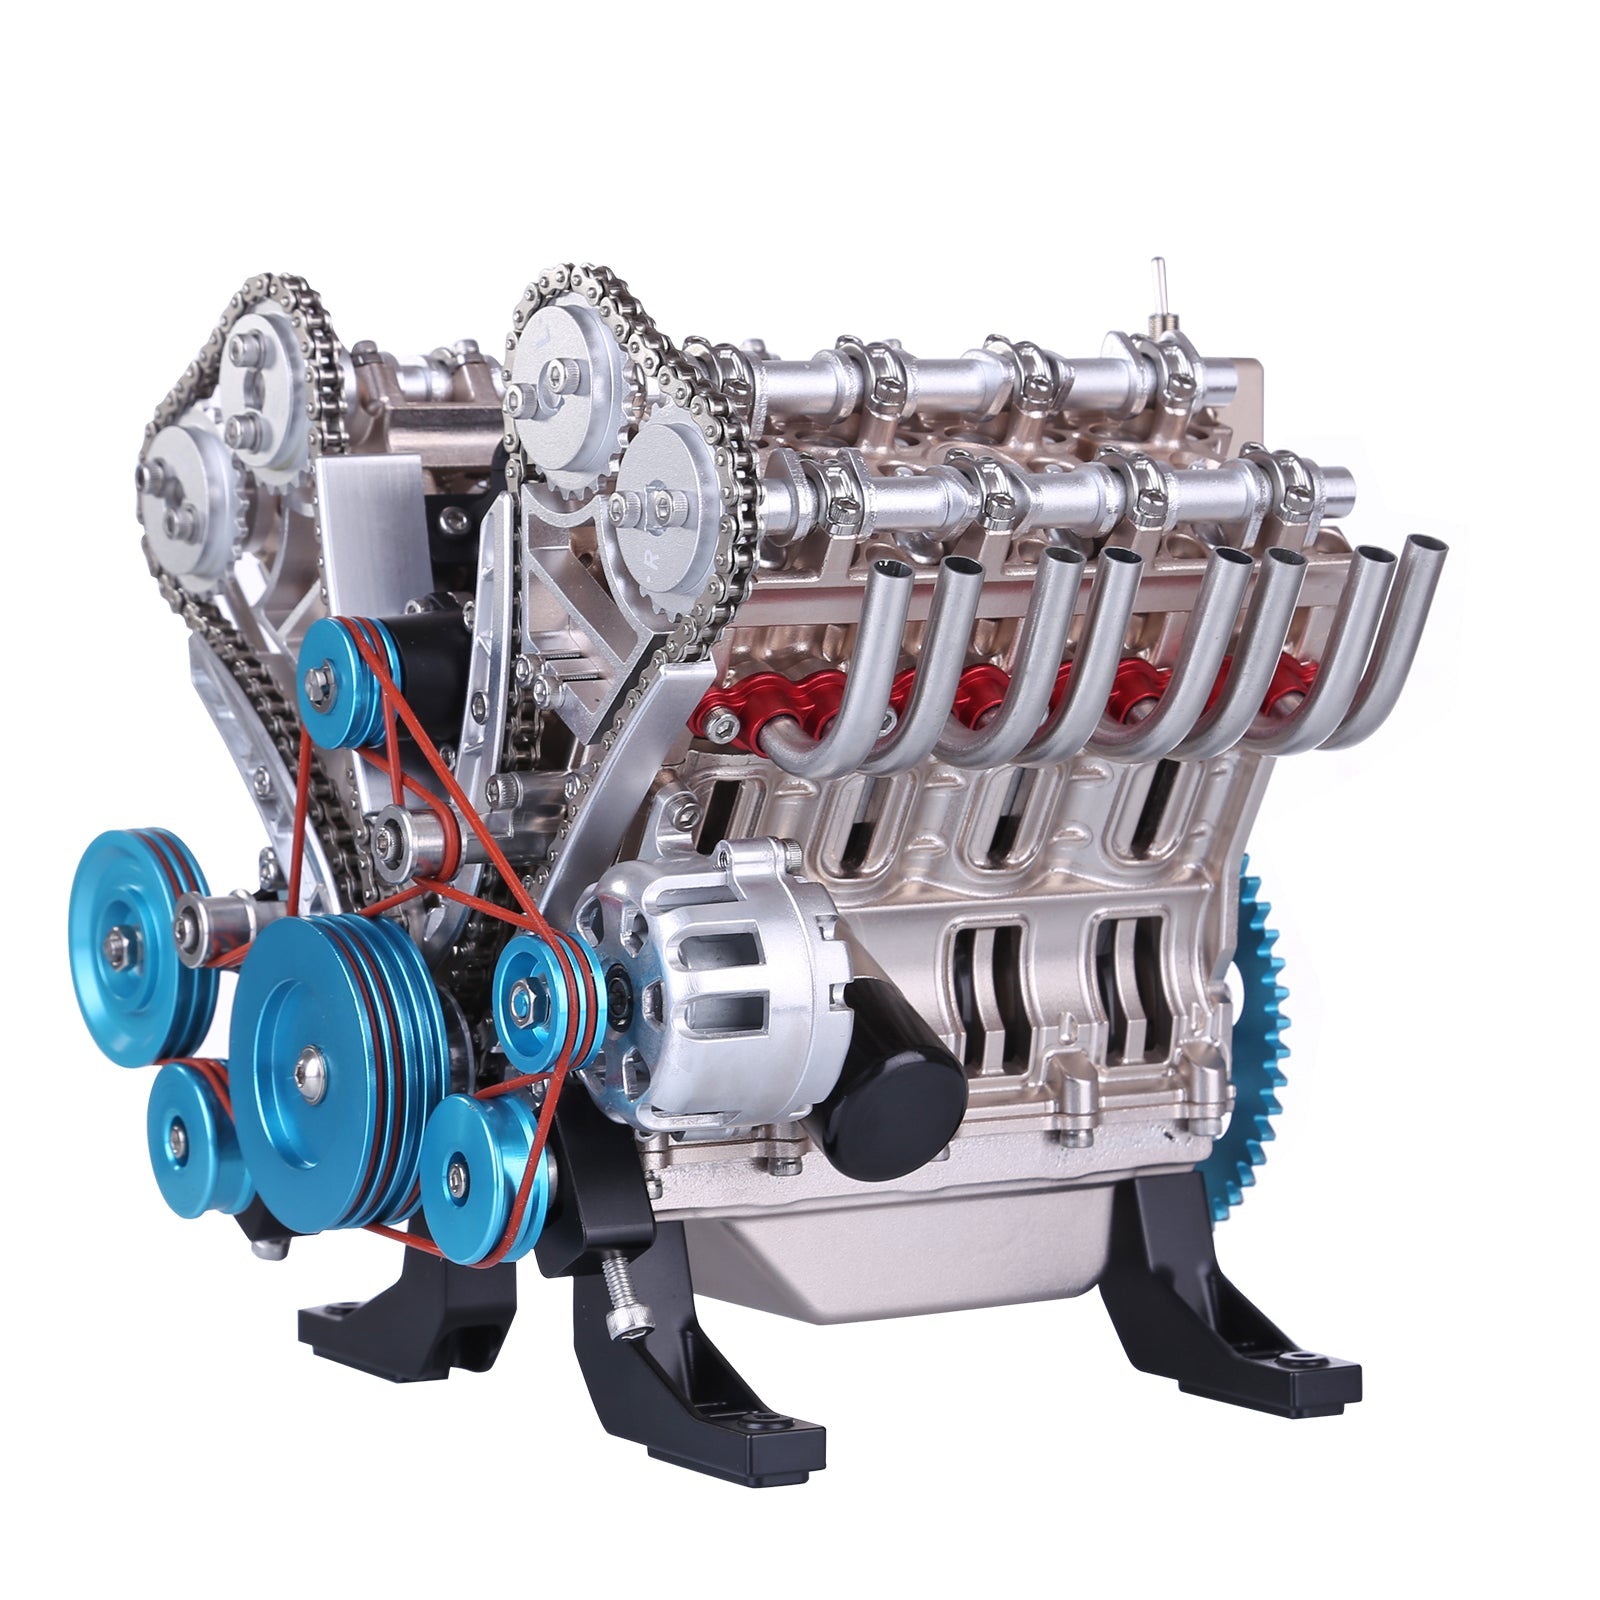 Kit de modelo de motor V8, modelo de motor simulado de metal de 8  cilindros, modelo de motor eléctrico de montaje de bricolaje, modelo de  enseñanza de